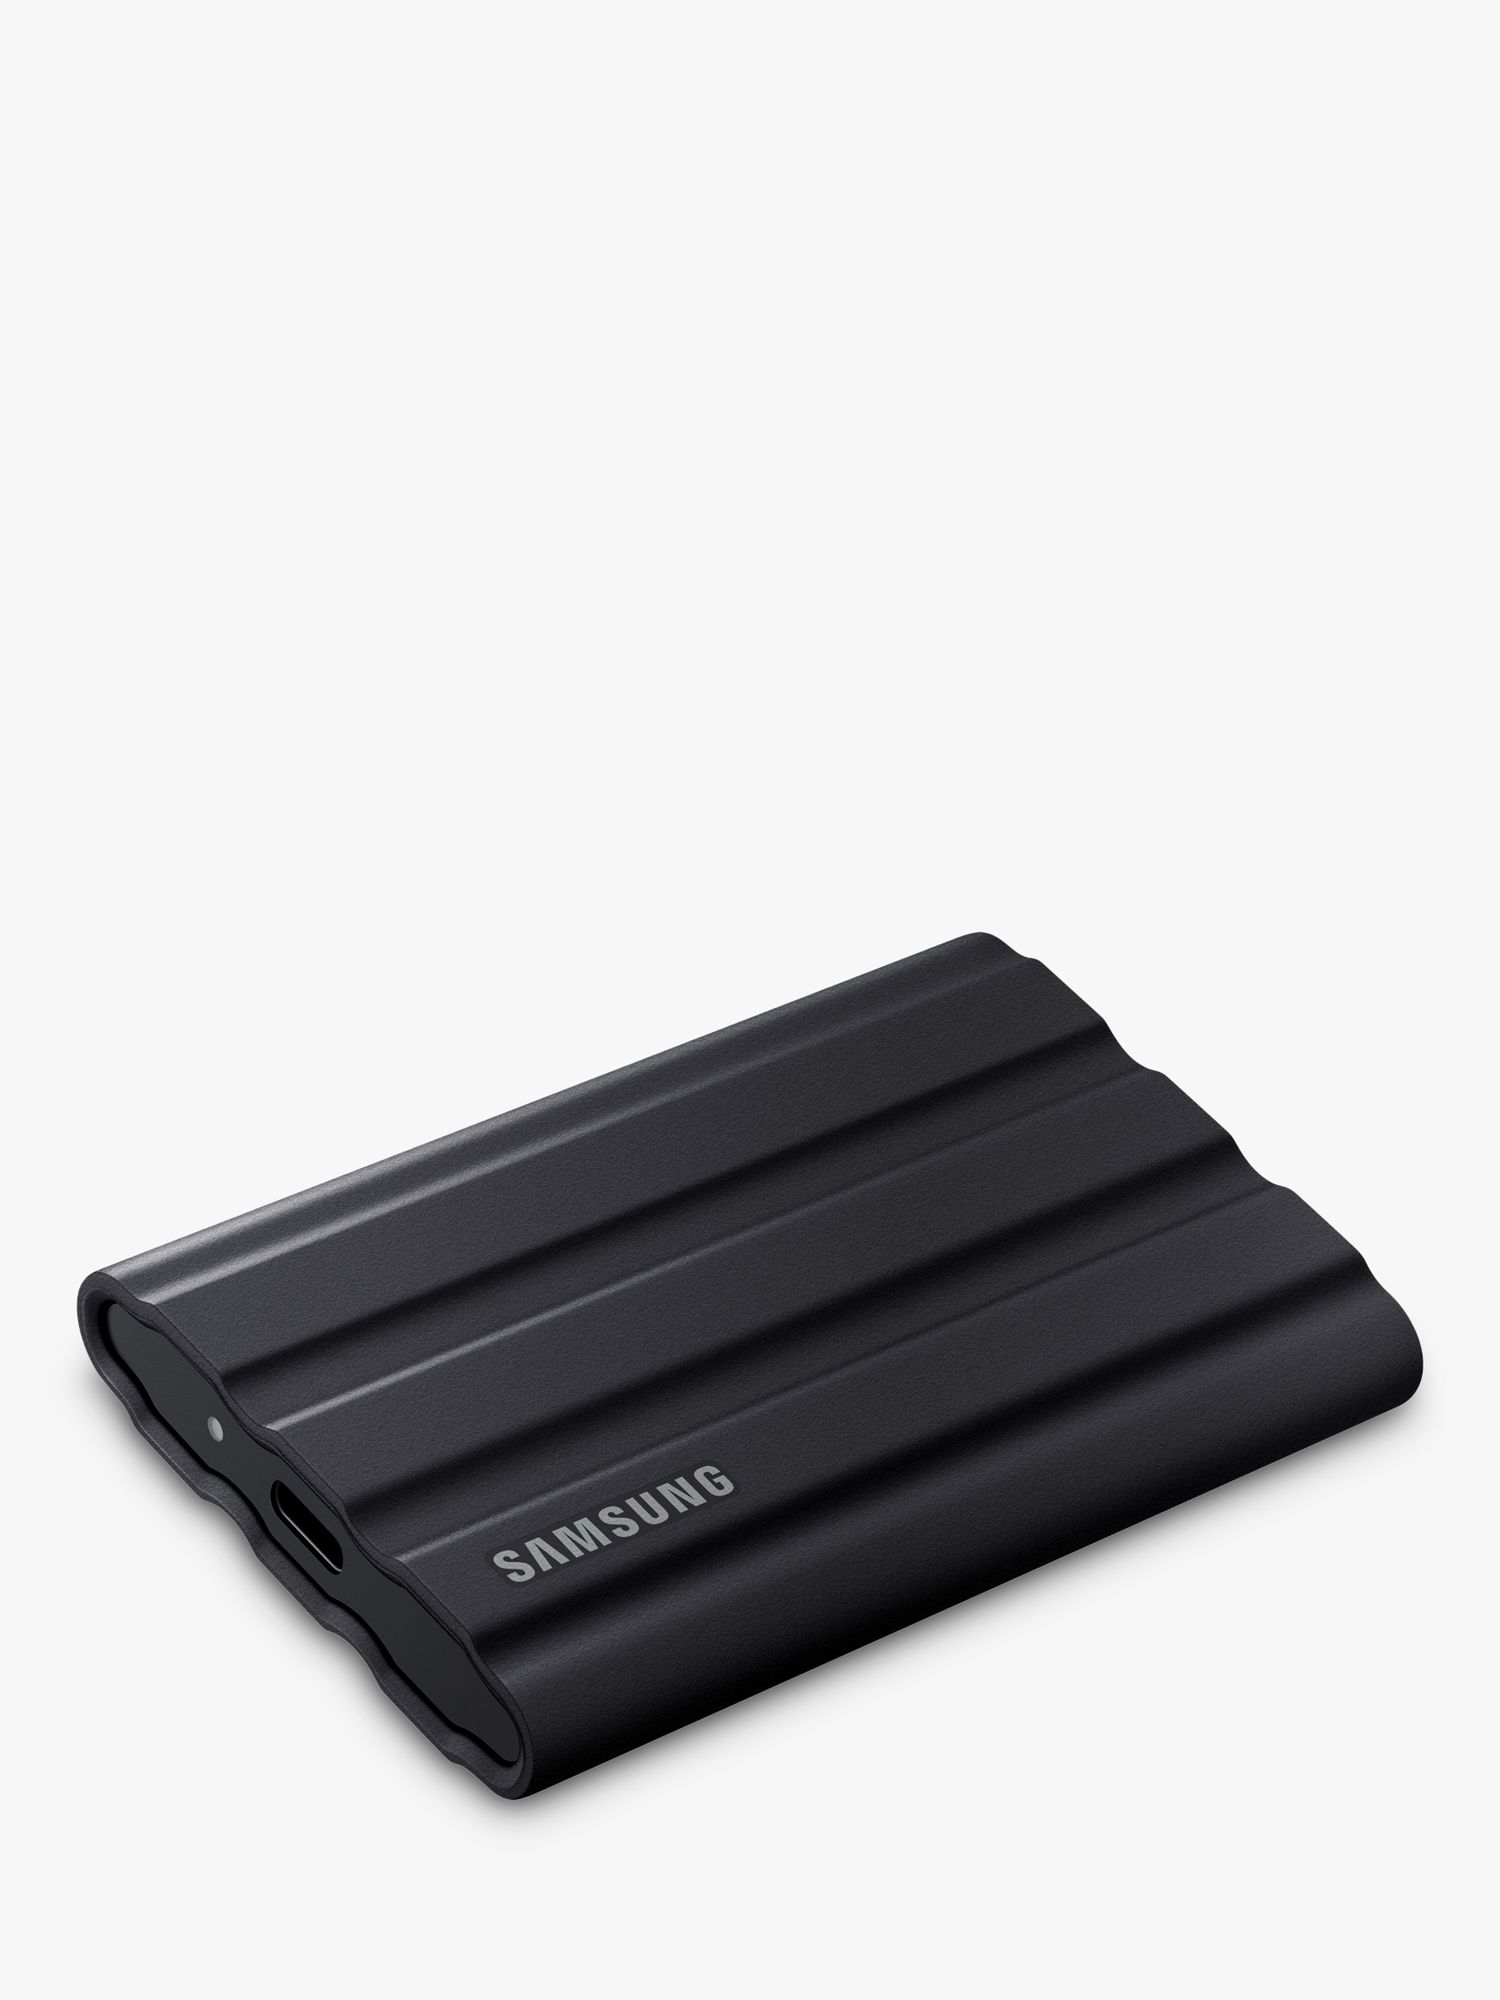 Samsung T7 Portable SSD, Order Online, London